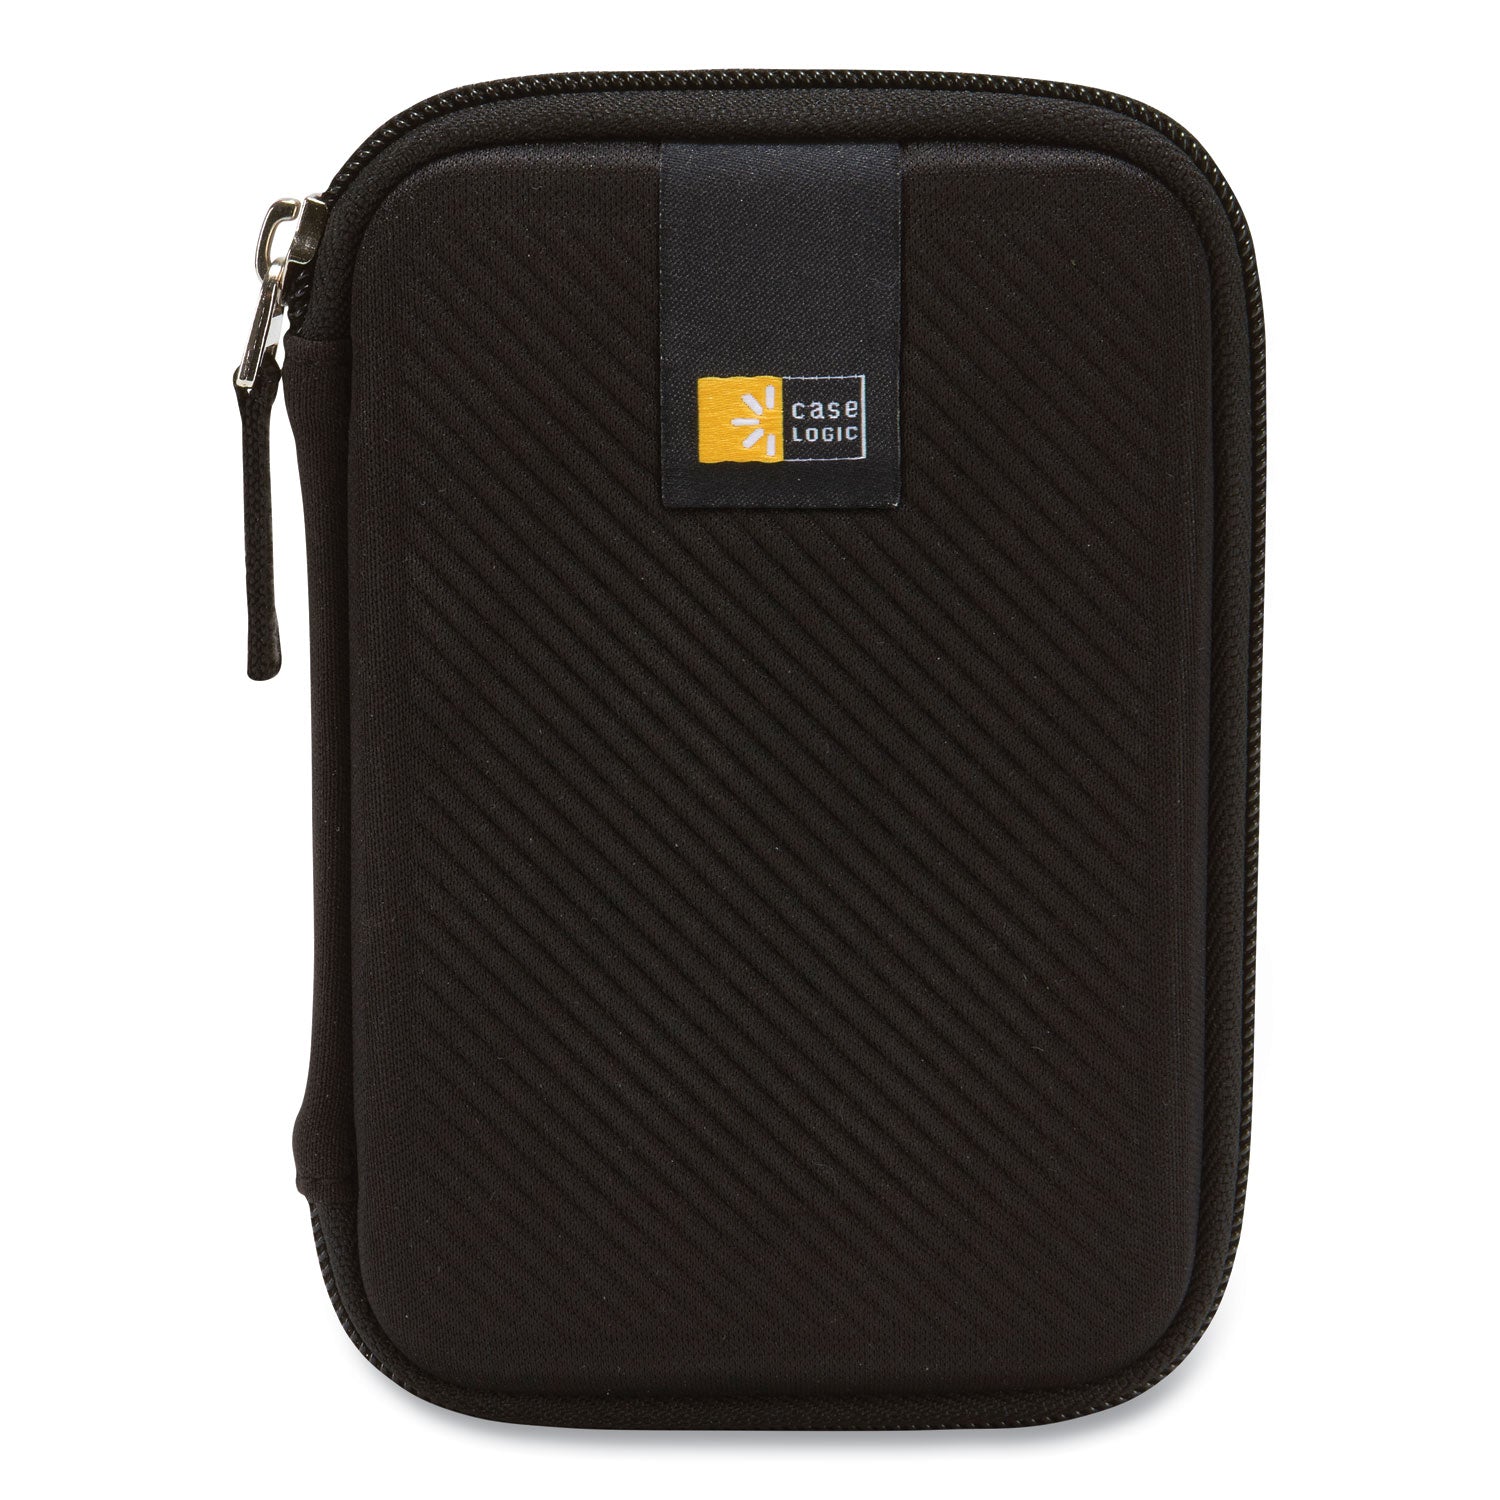 portable-hard-drive-case-molded-eva-black_clg3201314 - 1